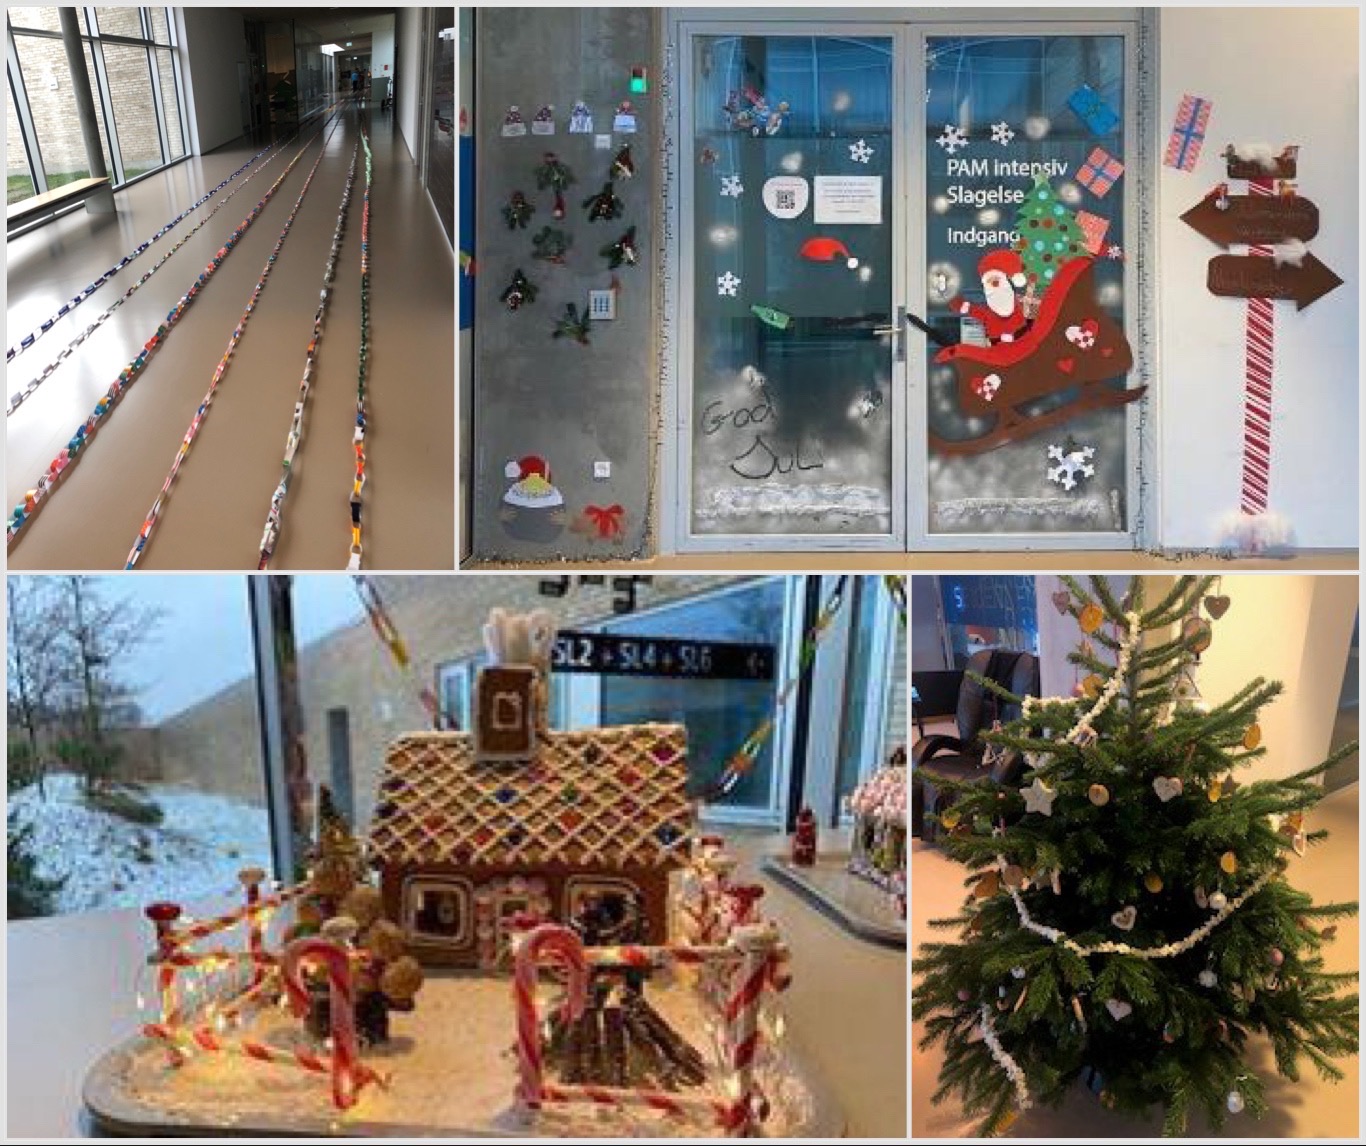 Kagehuse og julepynt collage 1